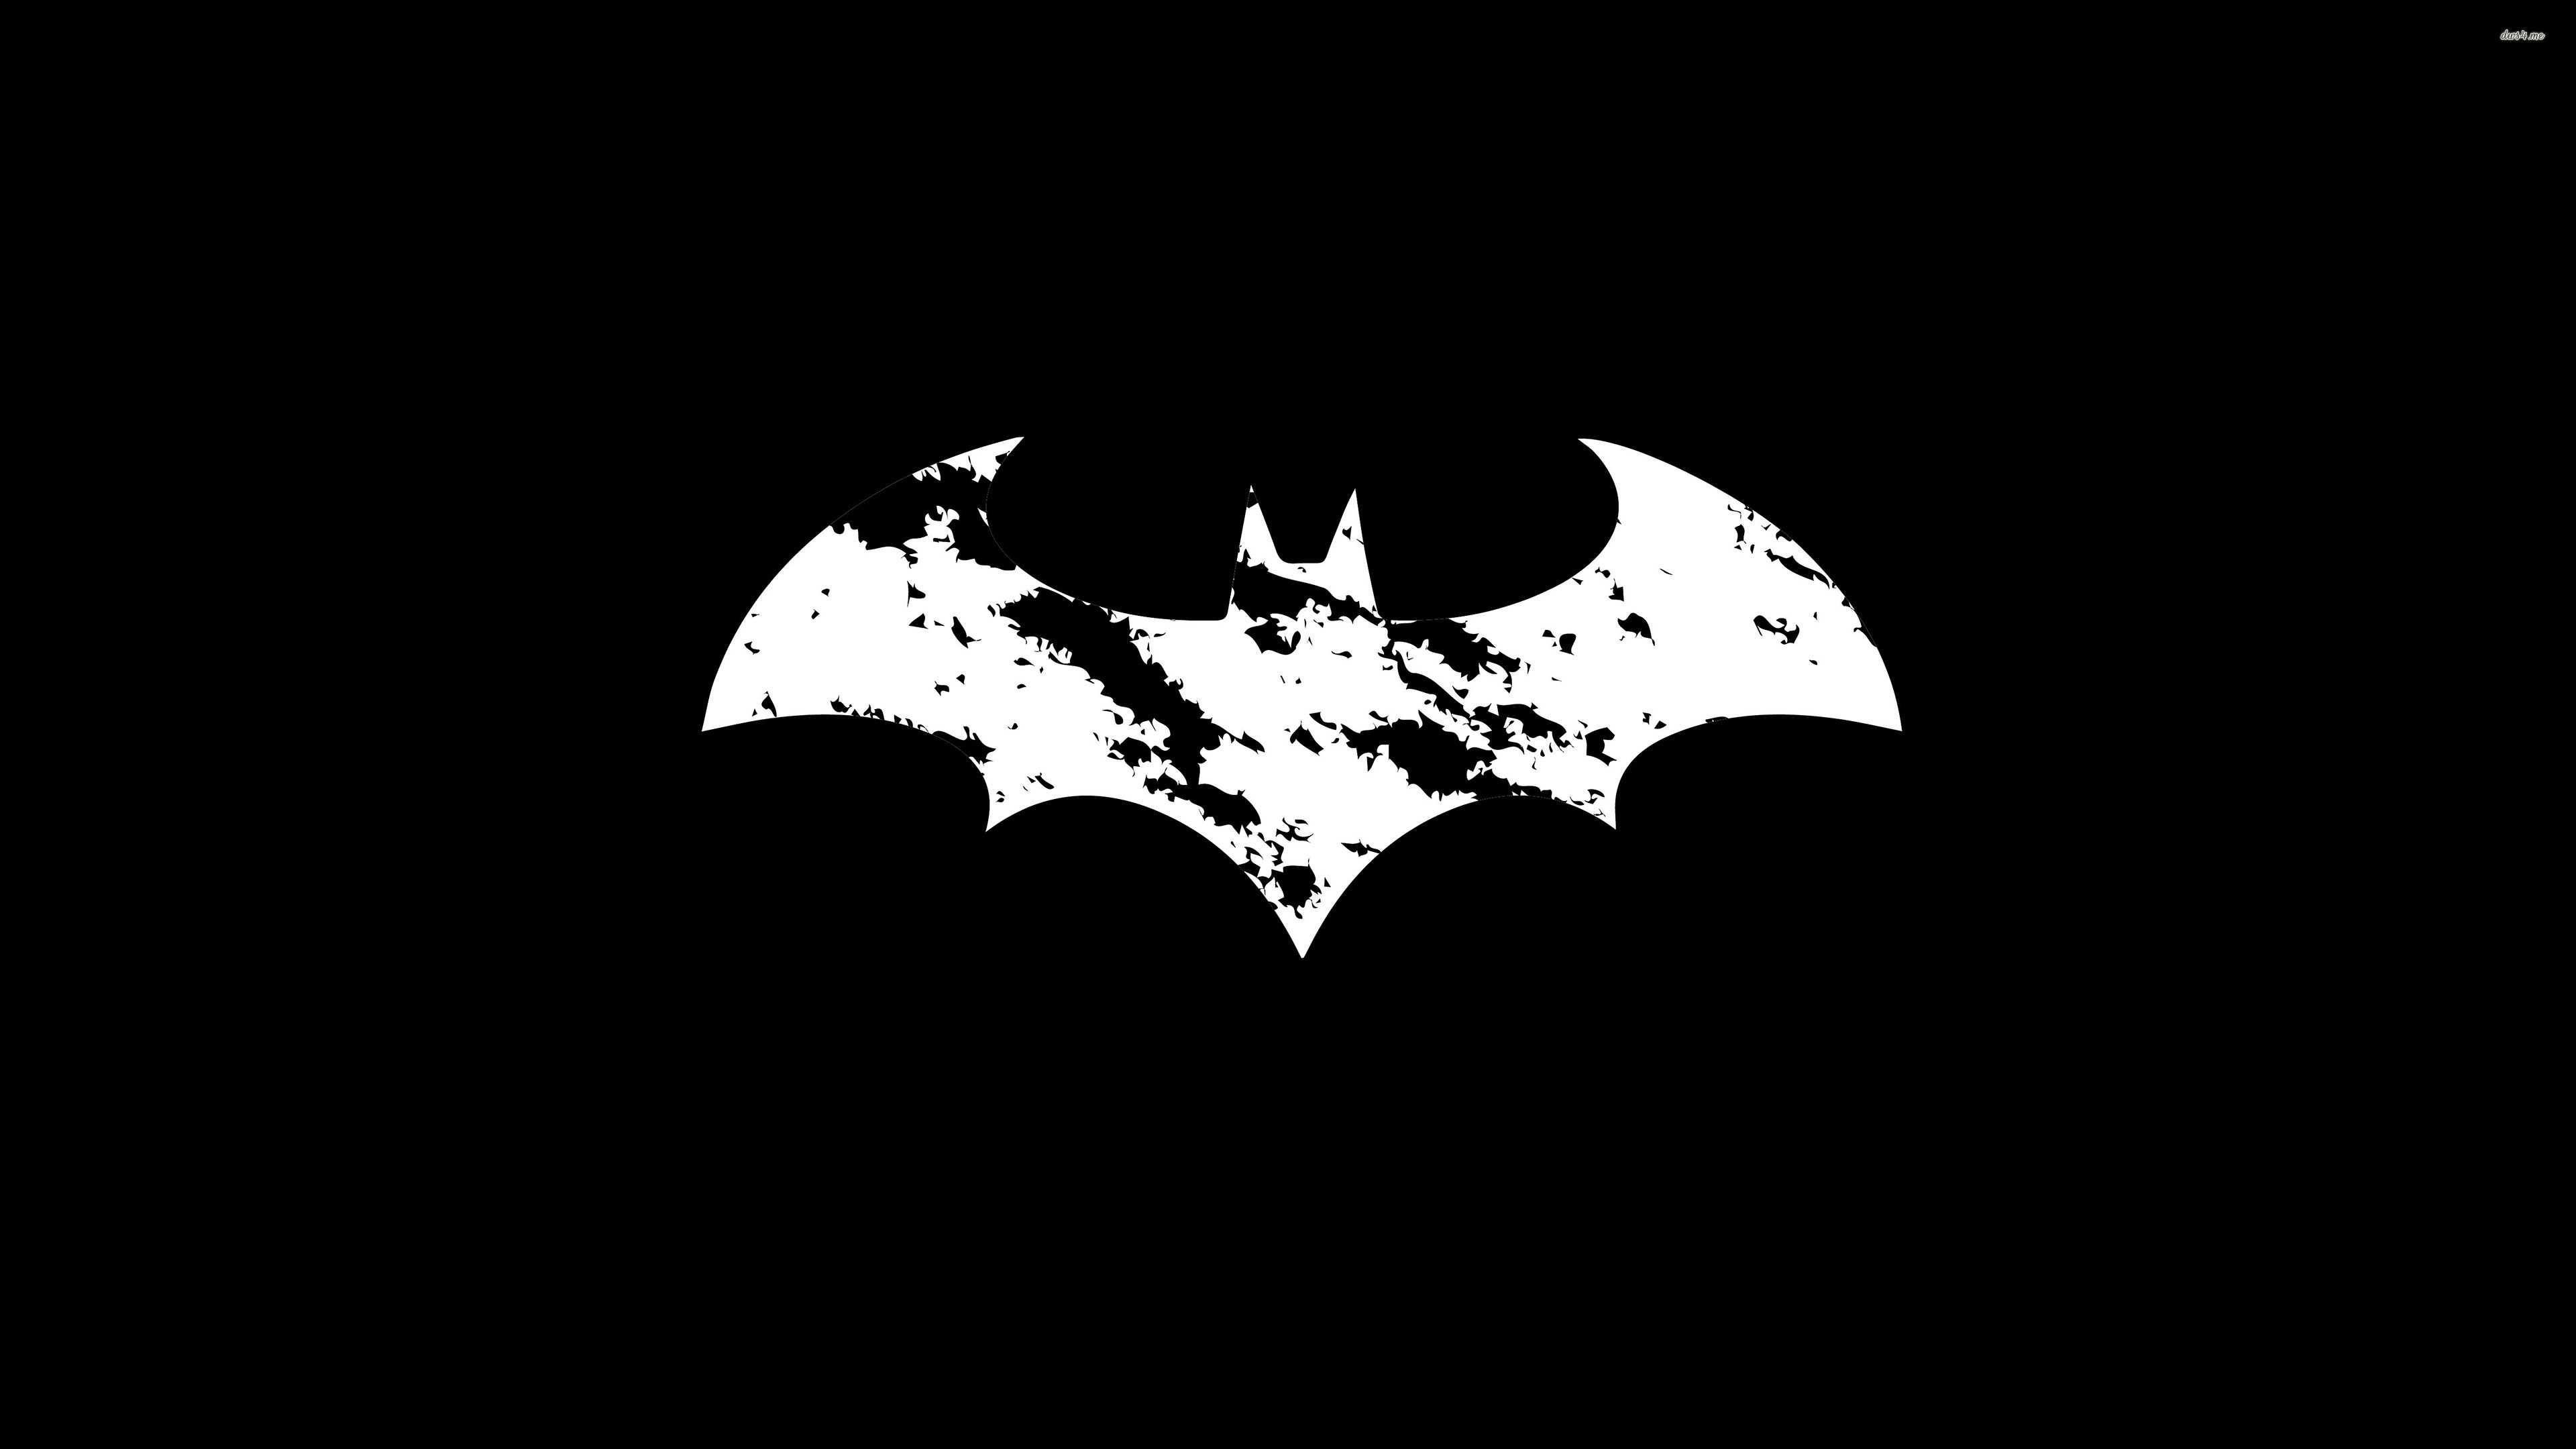 Batman Logo Wallpaper High Quality Photo For Desktop Qimplink 1080p